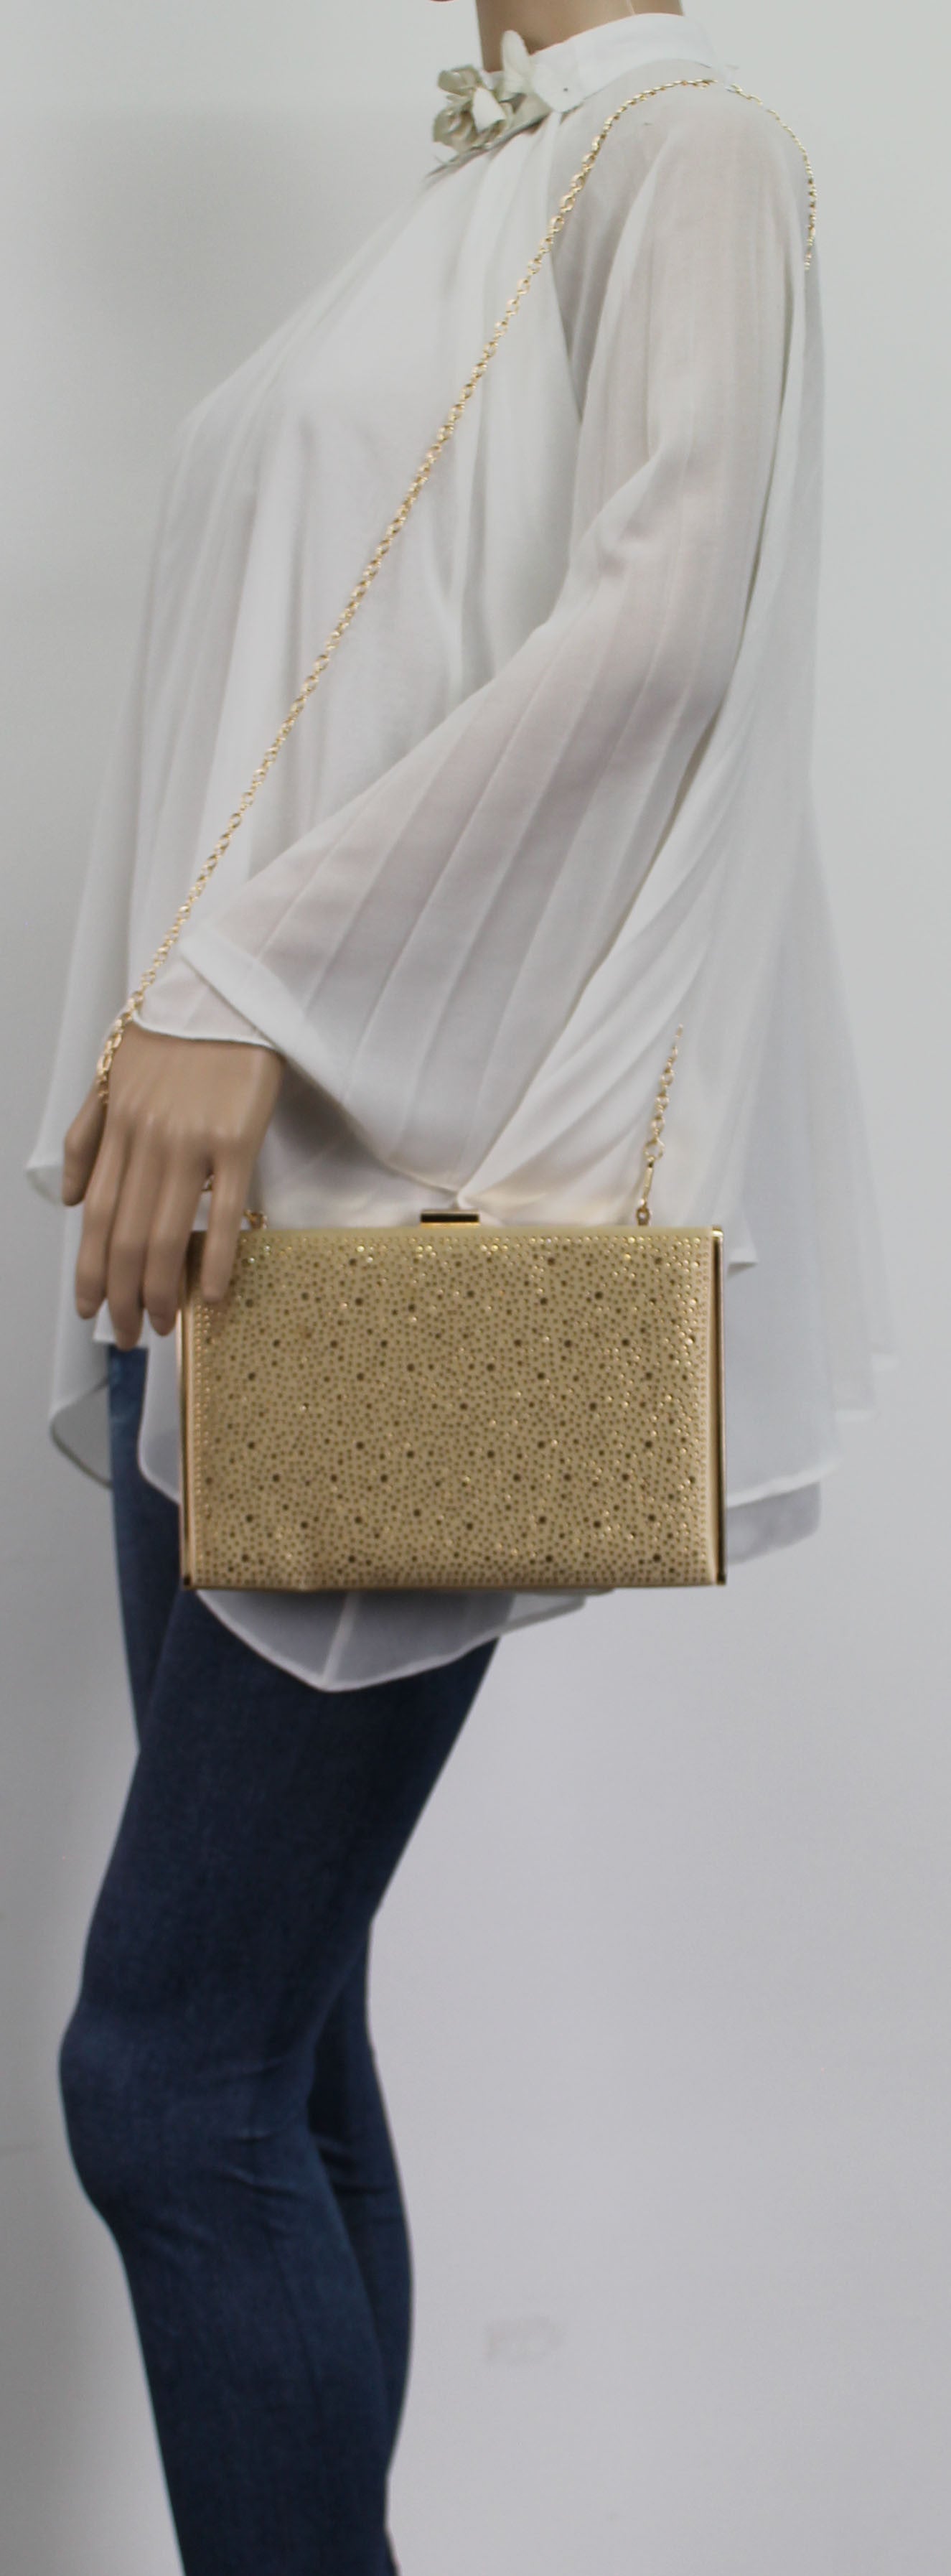 SWANKYSWANS Shanina Clutch Bag Gold Cute Cheap Clutch Bag For Weddings School and Work